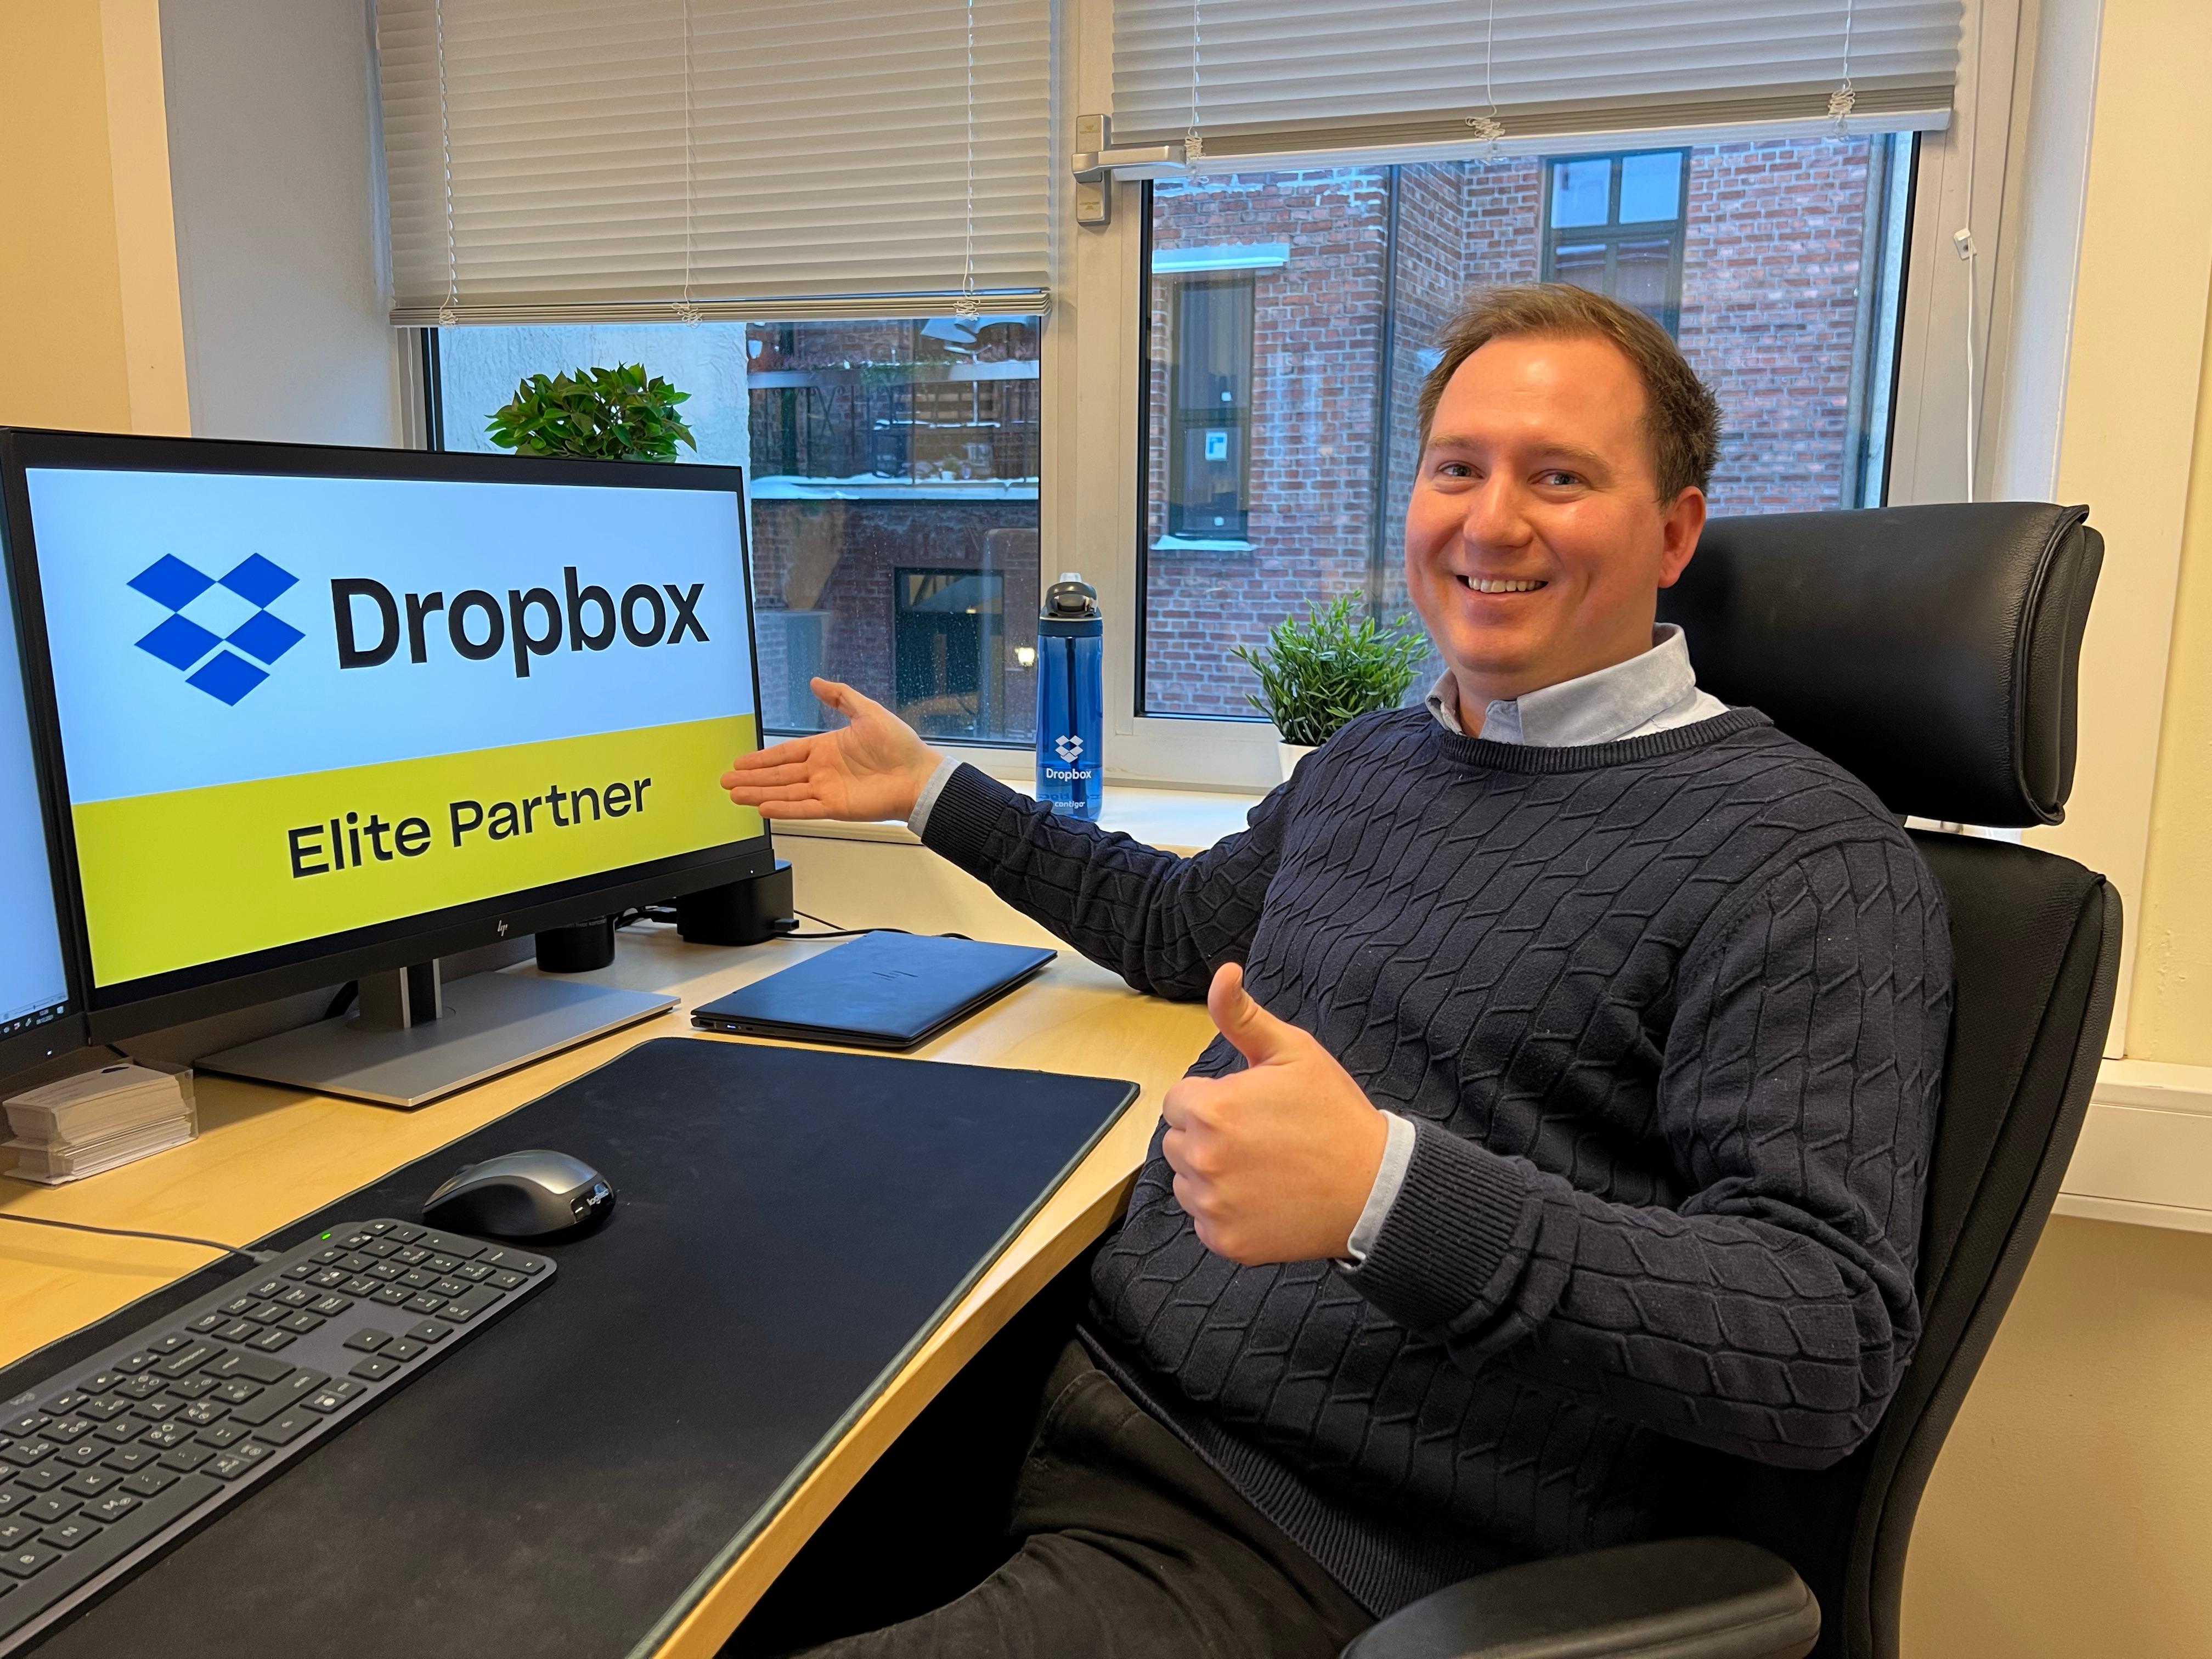 Dropbox - Elite Partner